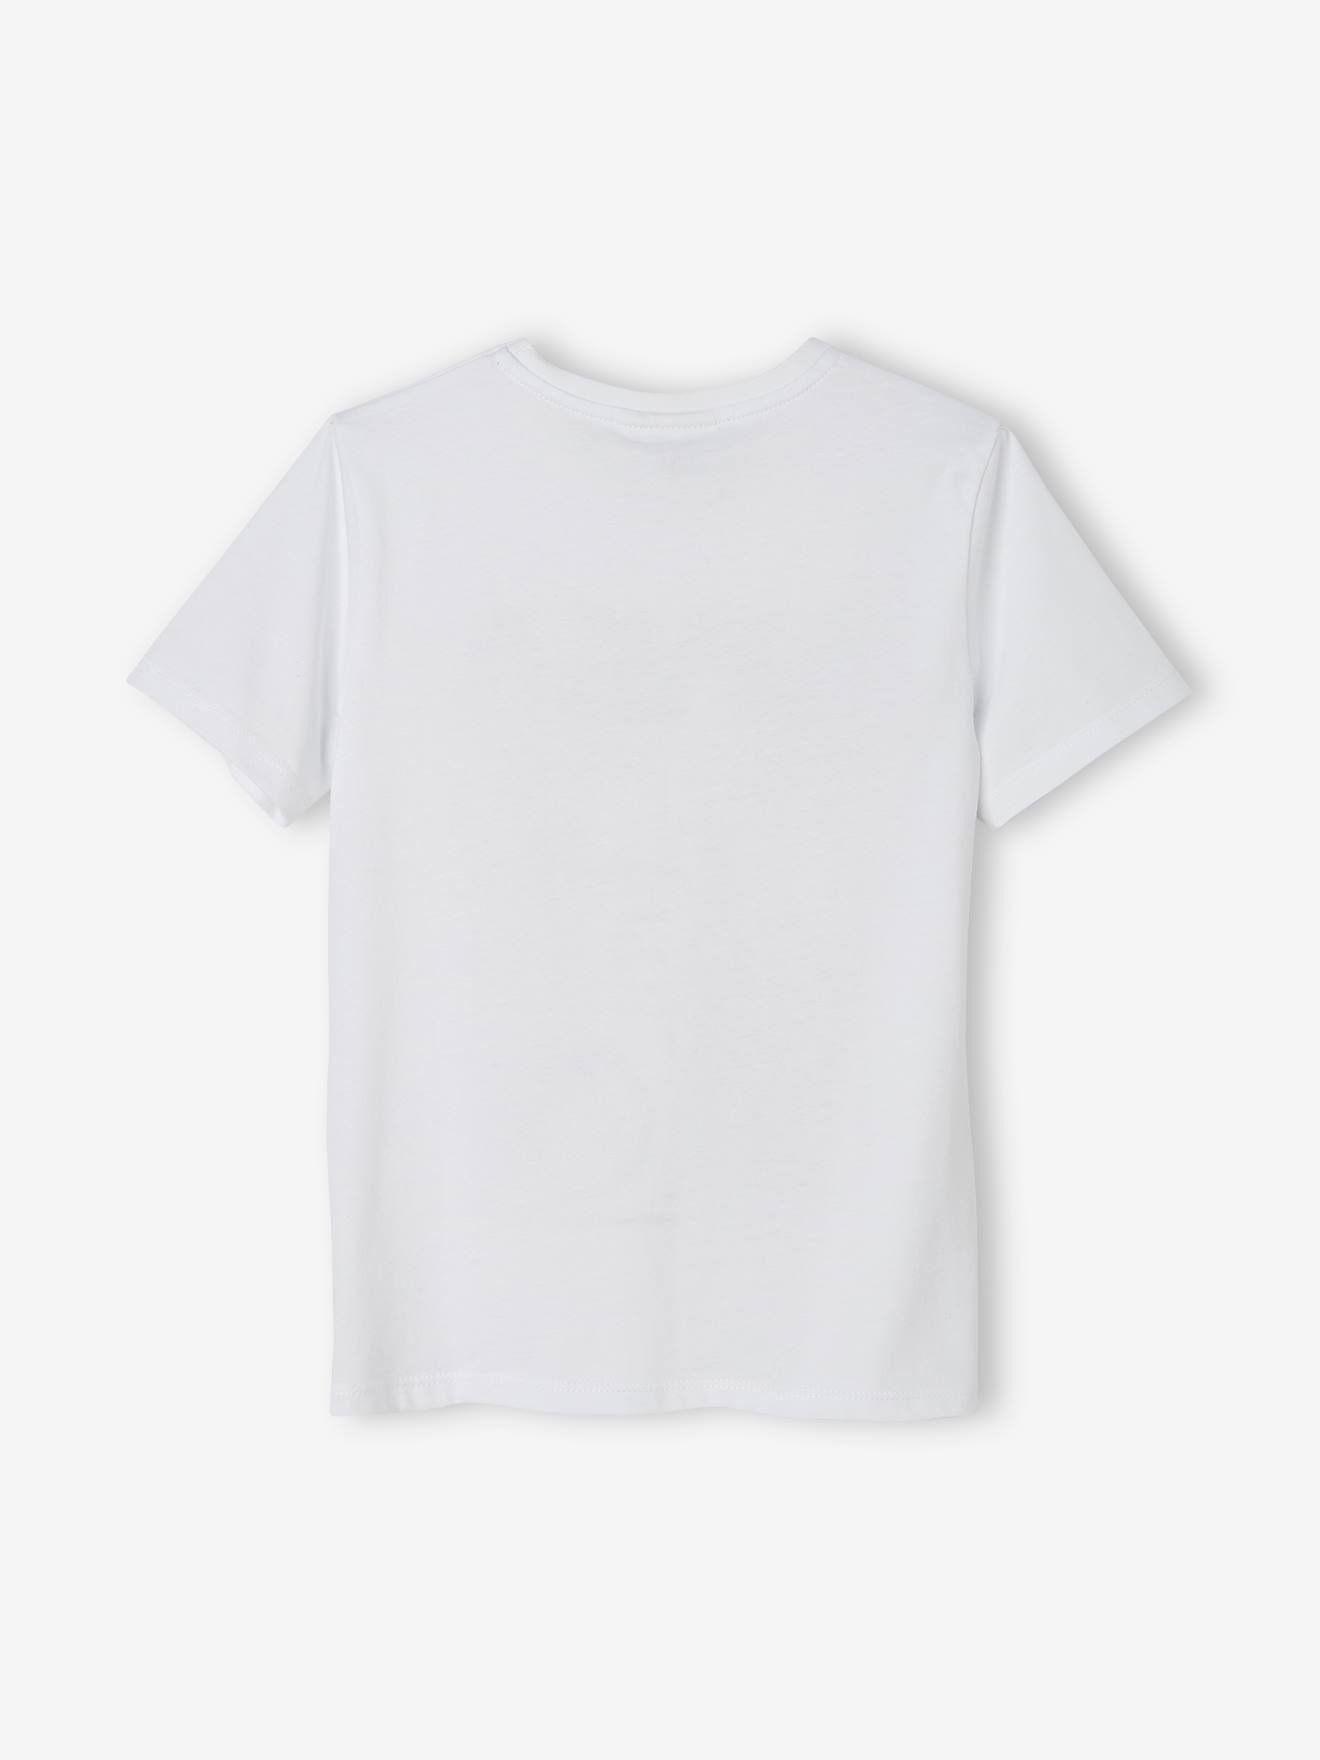 NASA® T-Shirt for Boys white, - Boys